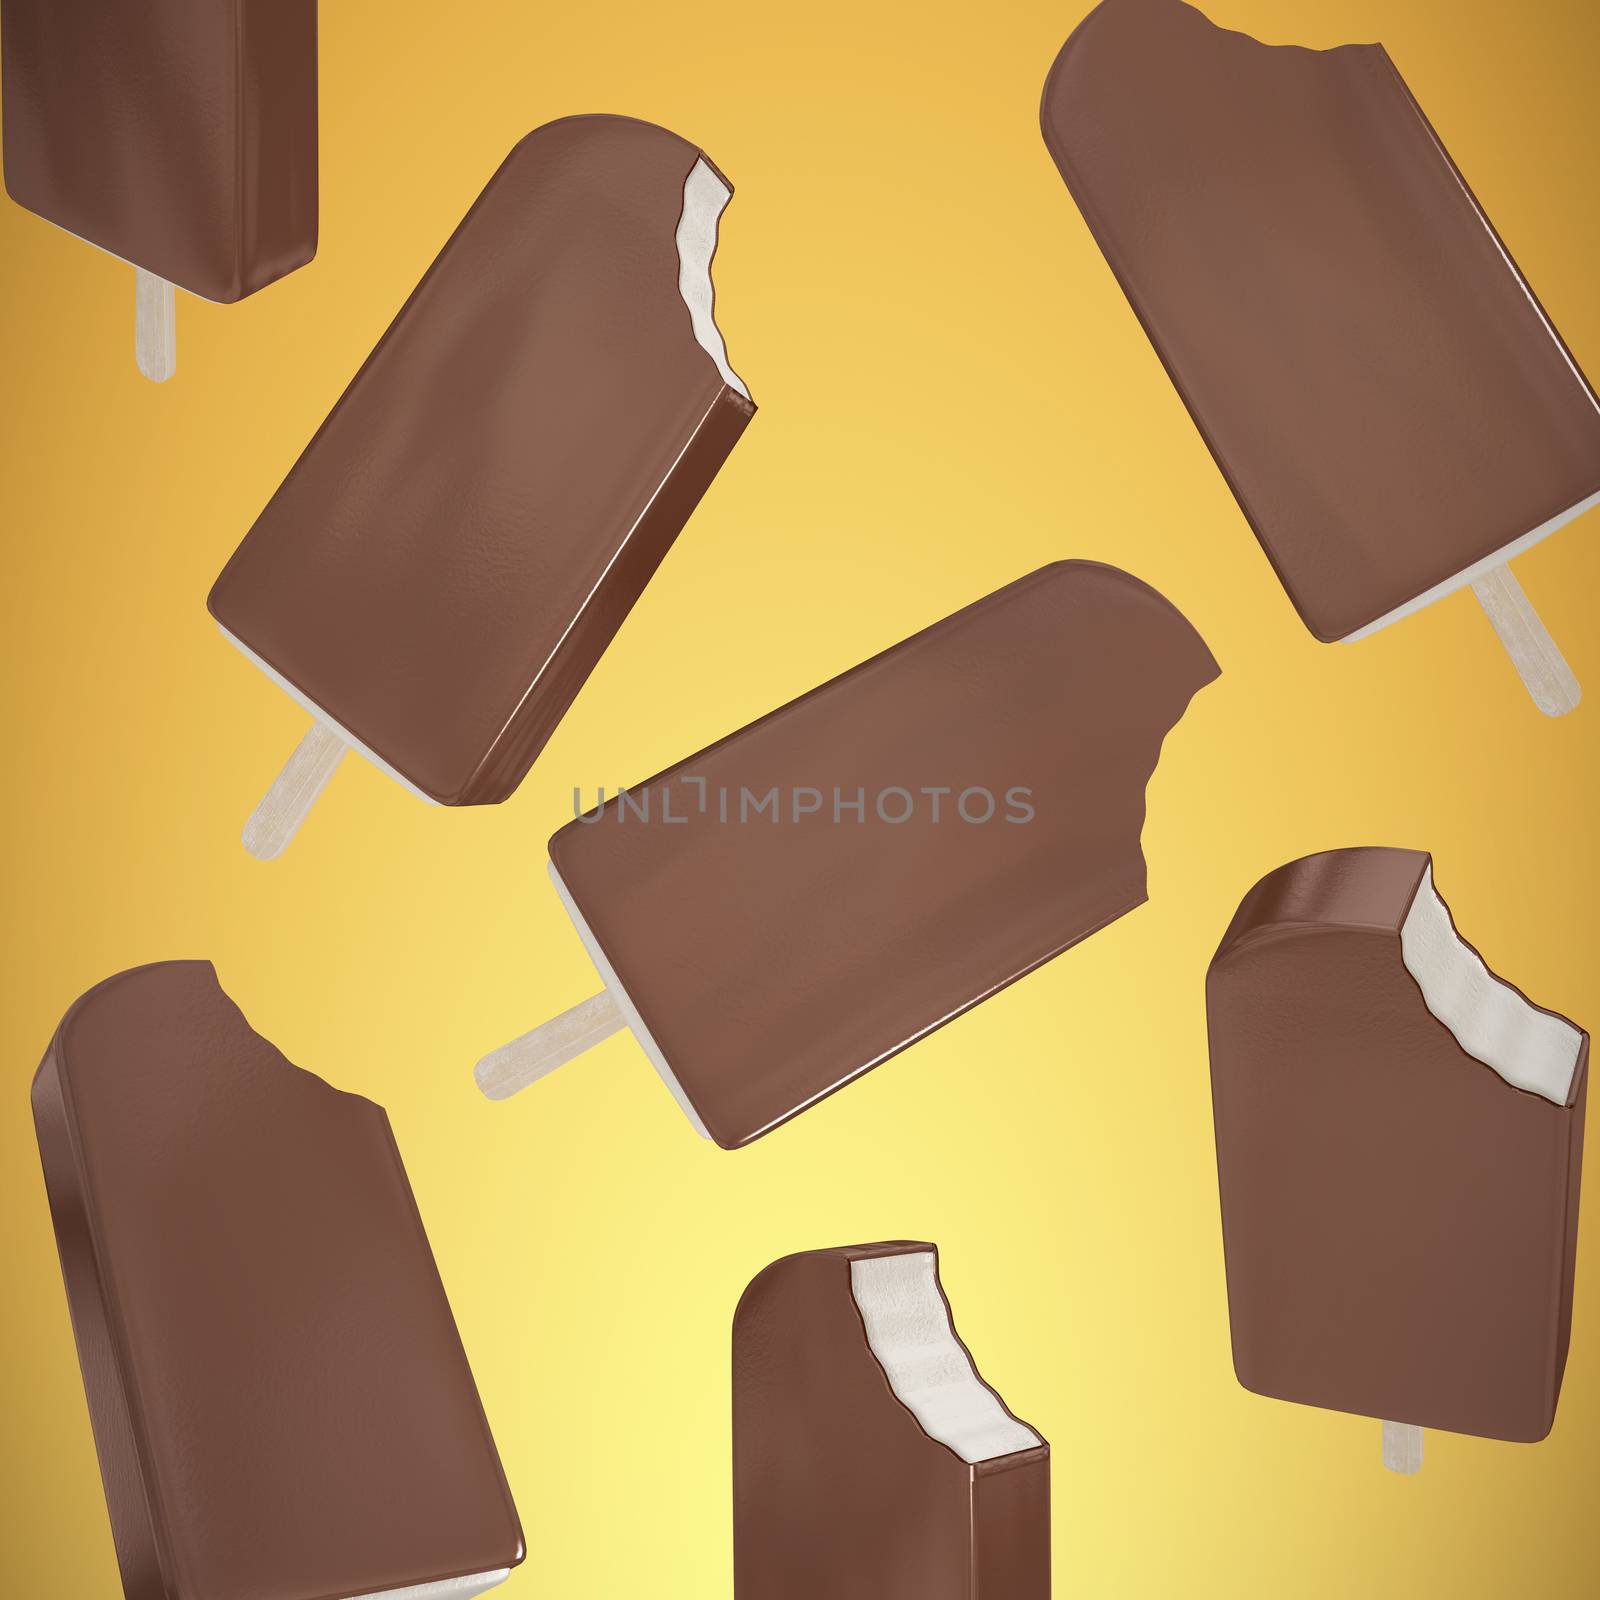 Composite image of chocolate ice-cream by Wavebreakmedia